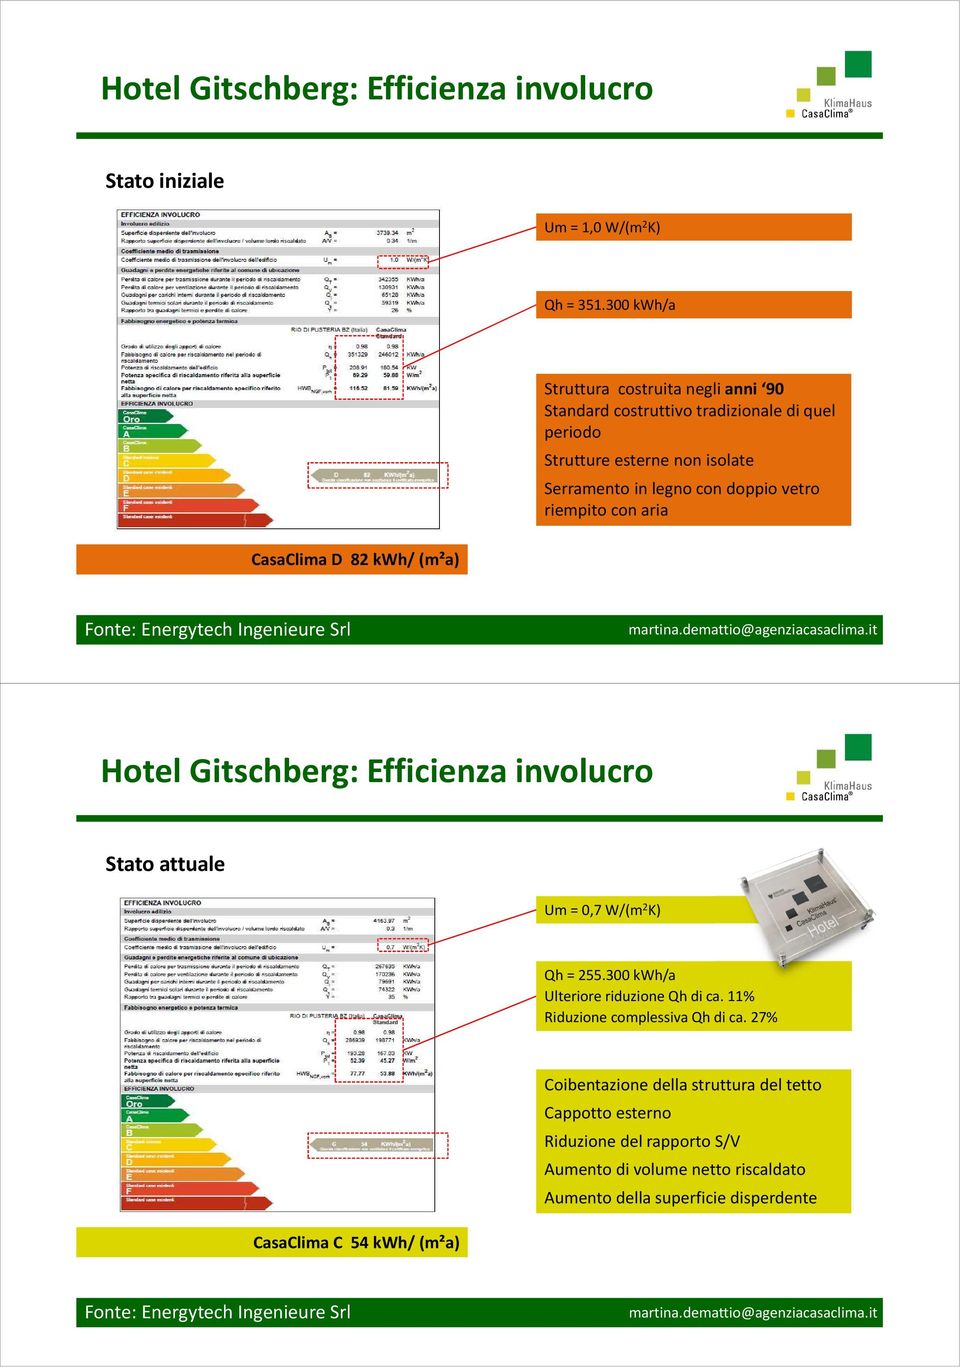 doppio vetro riempito con aria Fonte: Energytech Ingenieure Srl Hotel Gitschberg: Efficienza involucro Stato attuale Um = 0,7 W/(m 2 K) Qh = 255.